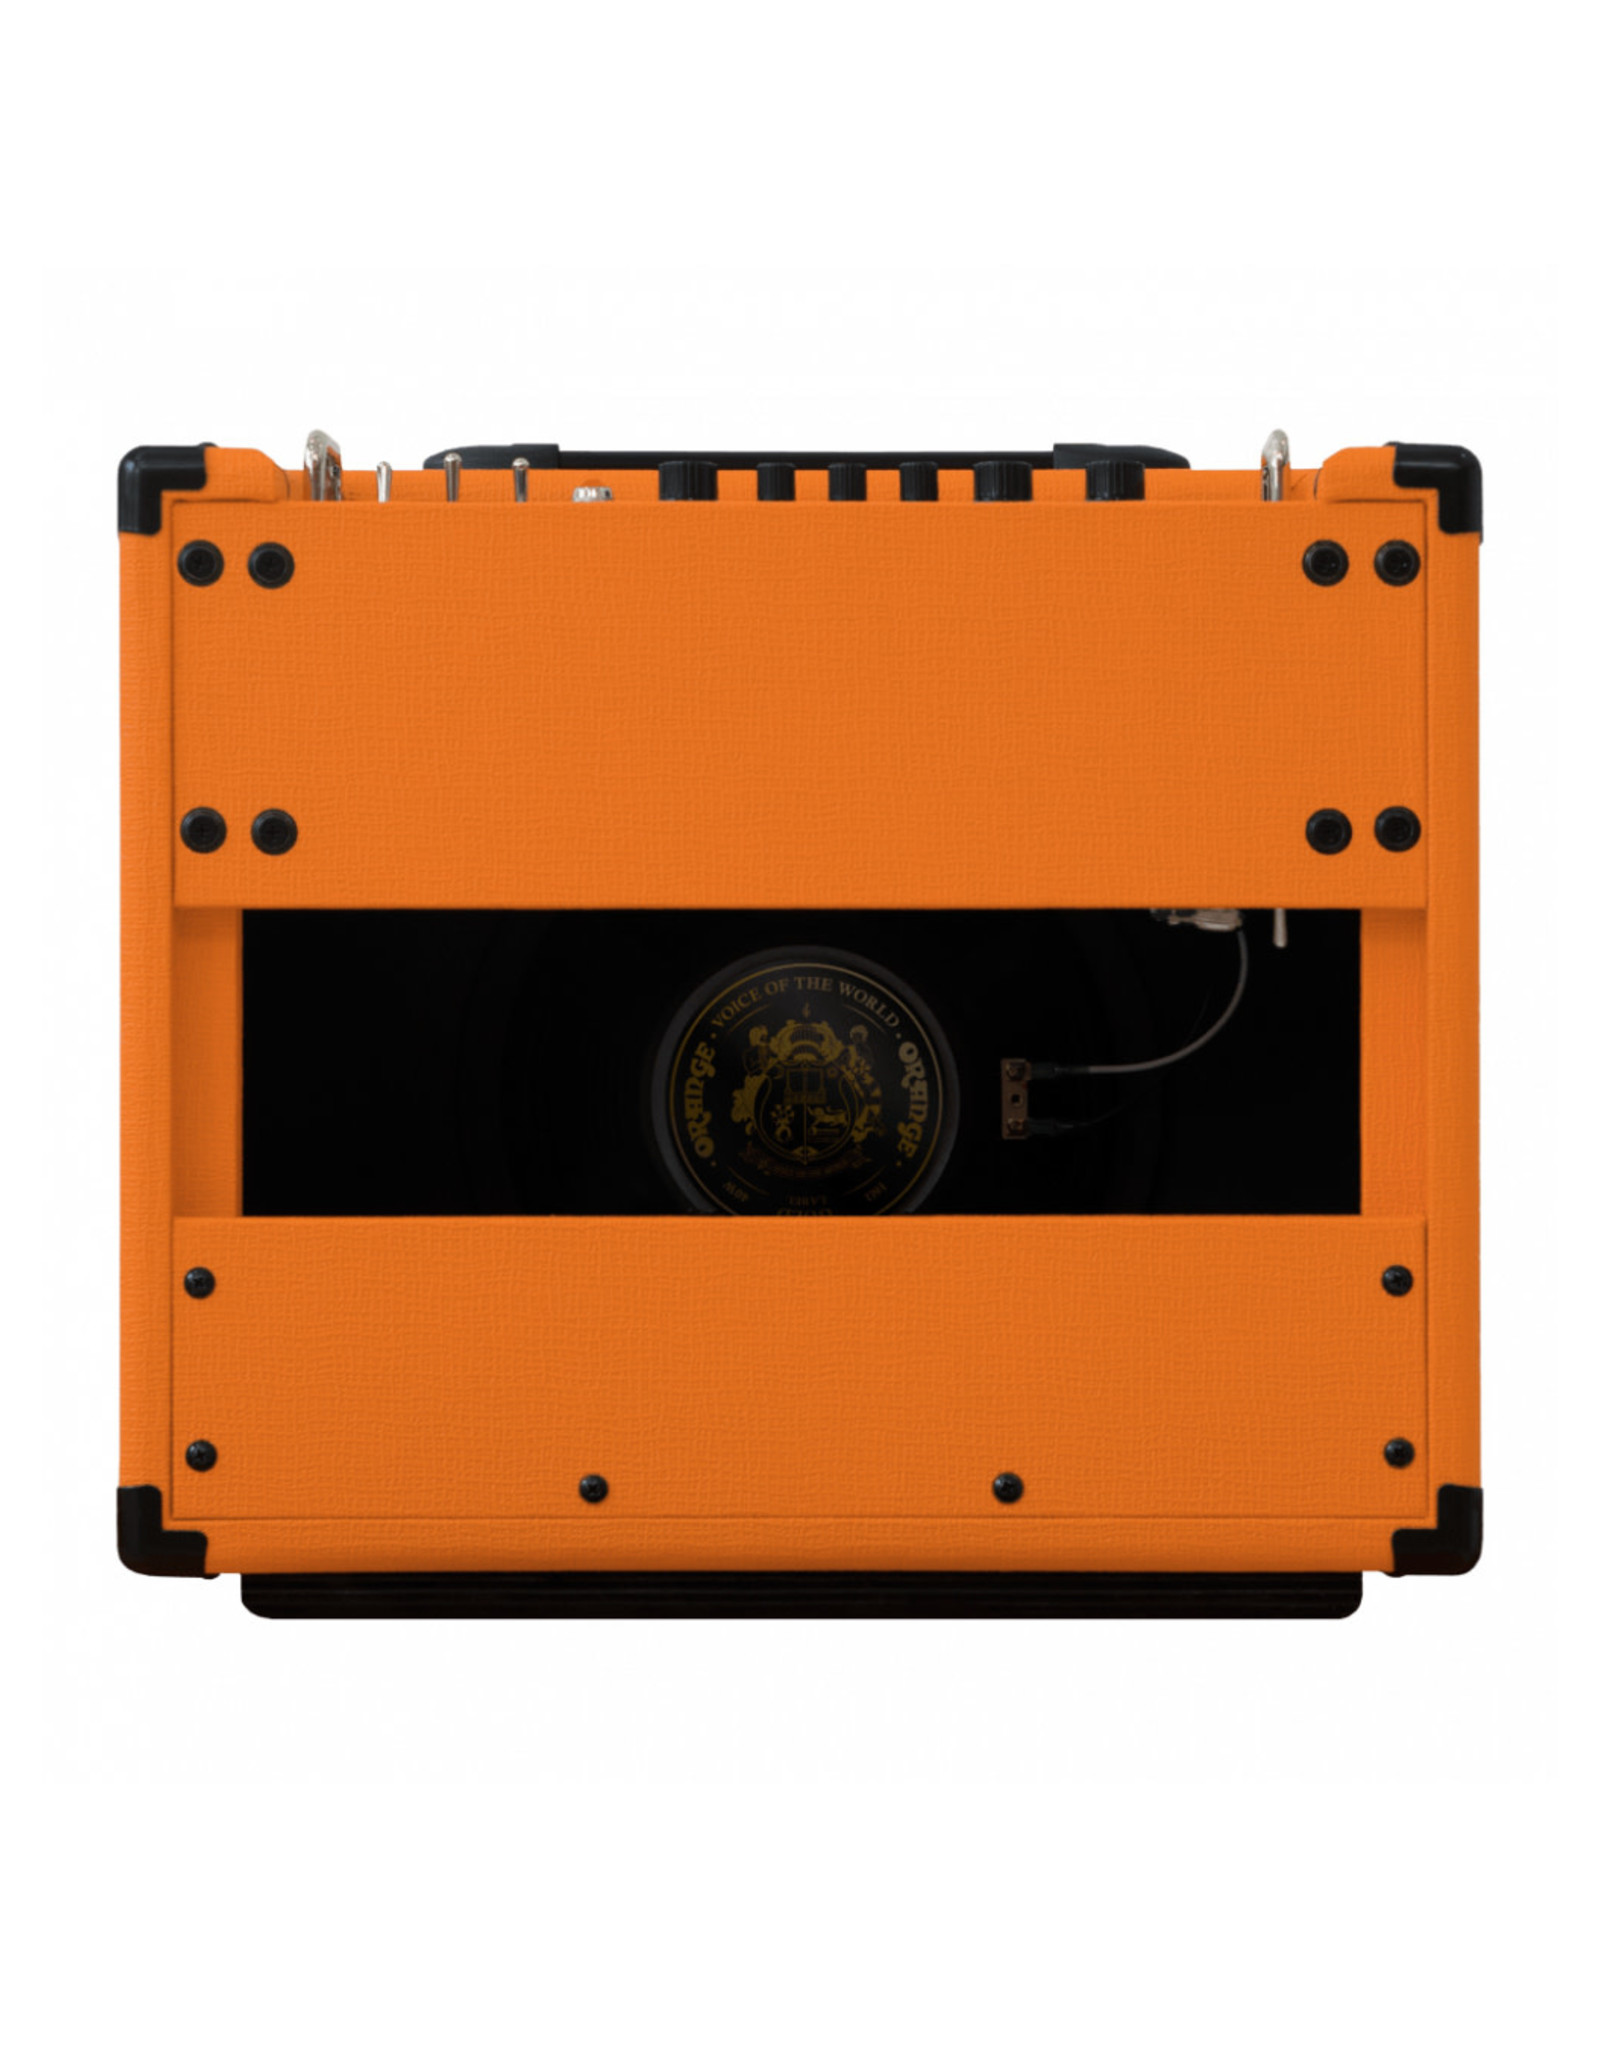 Orange Orange Rocker 15 Guitar Amplifier